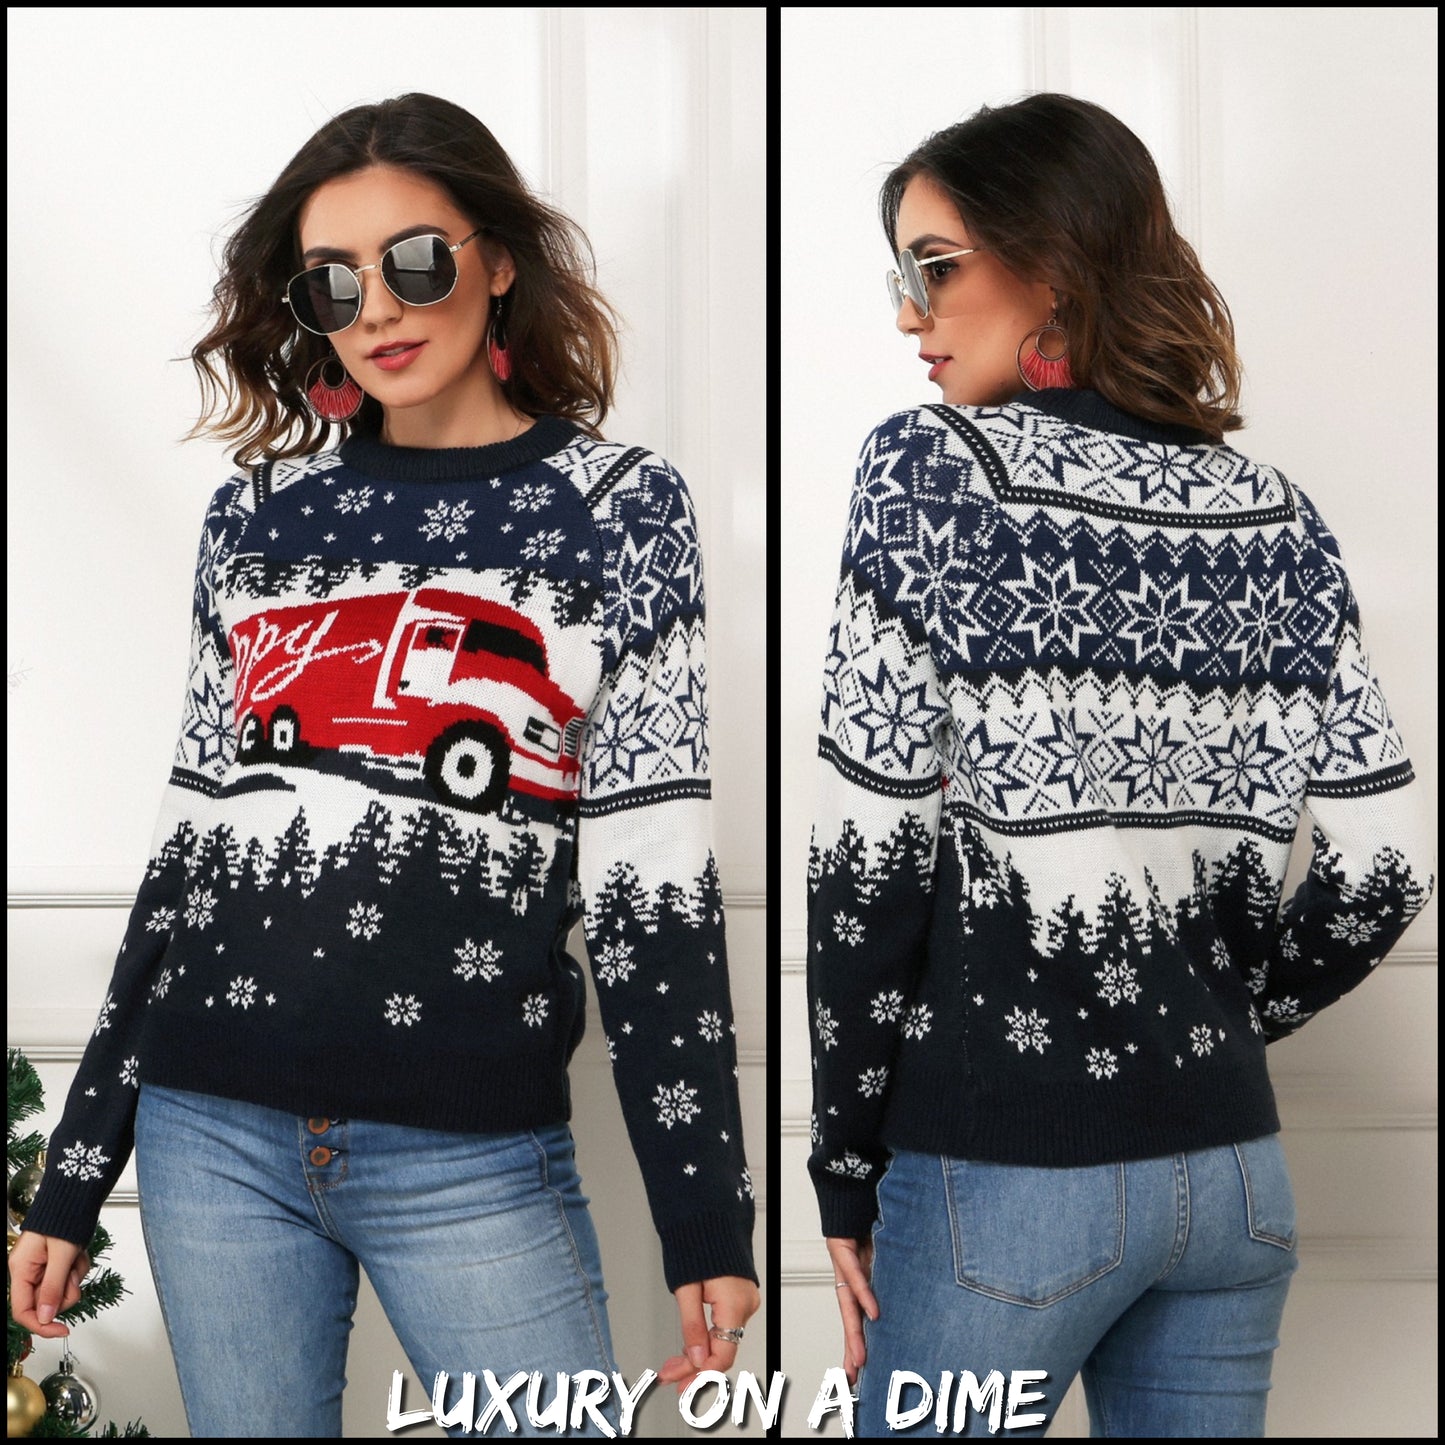 HAPPY Semi Truck Knit Fair Isle Geometric Snowflake Classic Pullover Winter Sweater